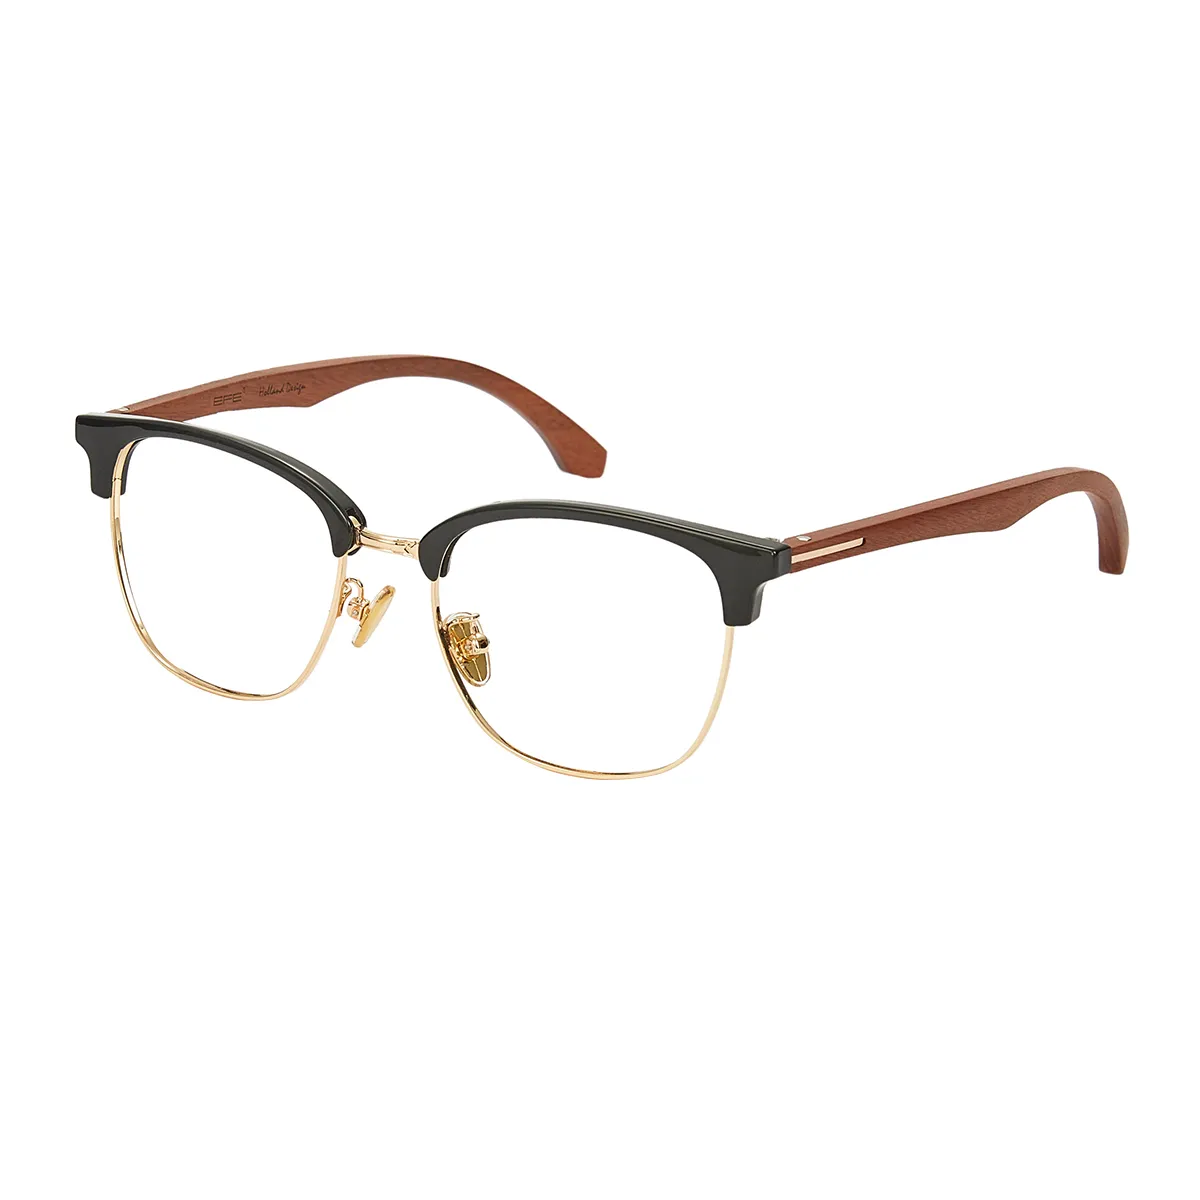 Fashion Browline Black-Gold Glasses for Men